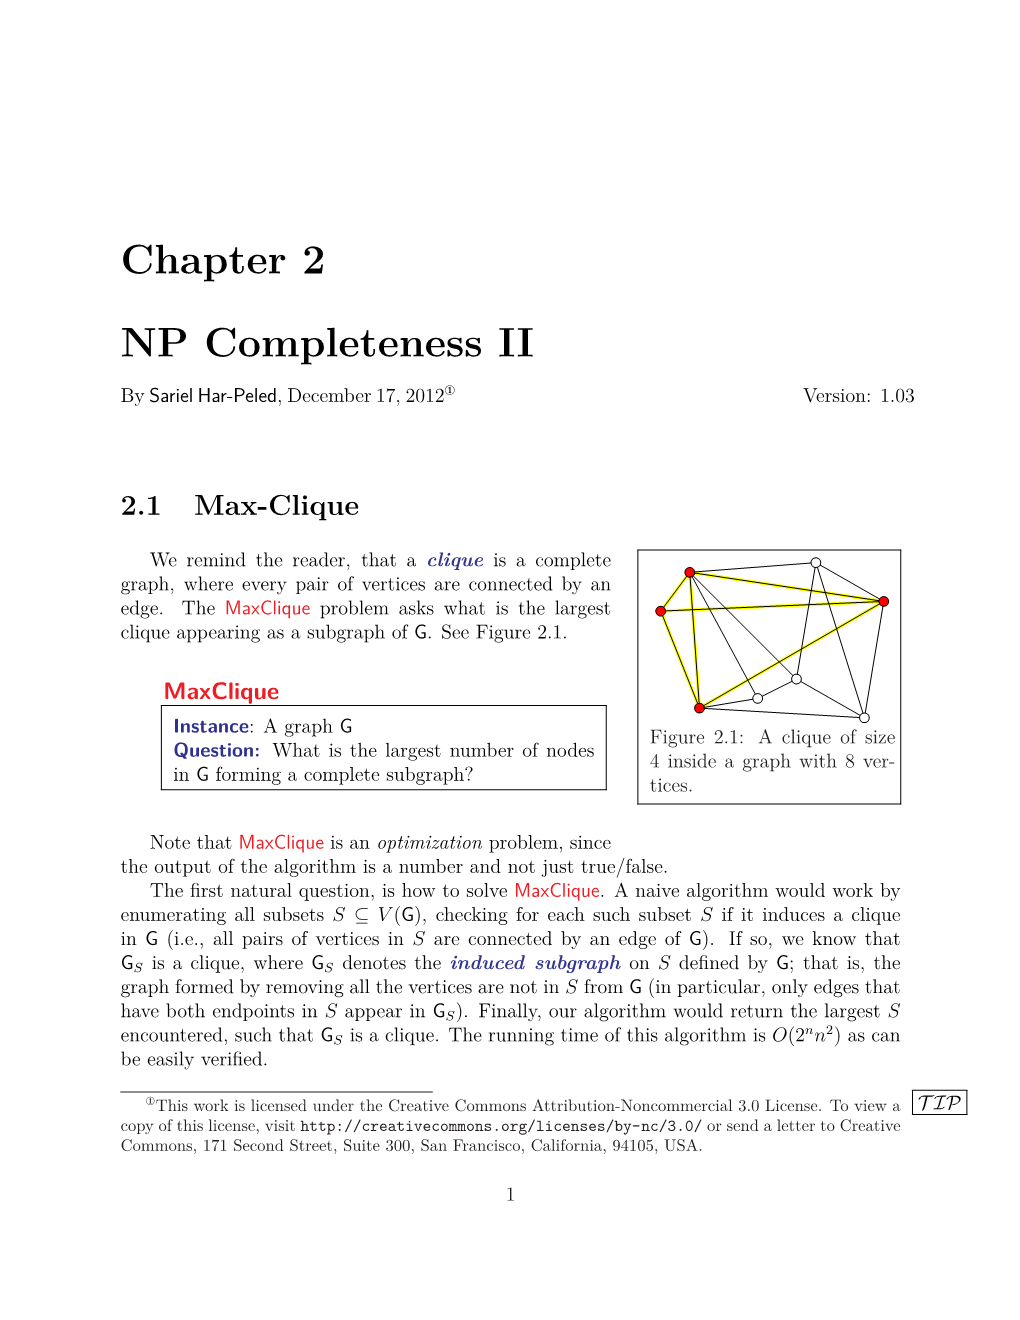 Chapter 2 NP Completeness II